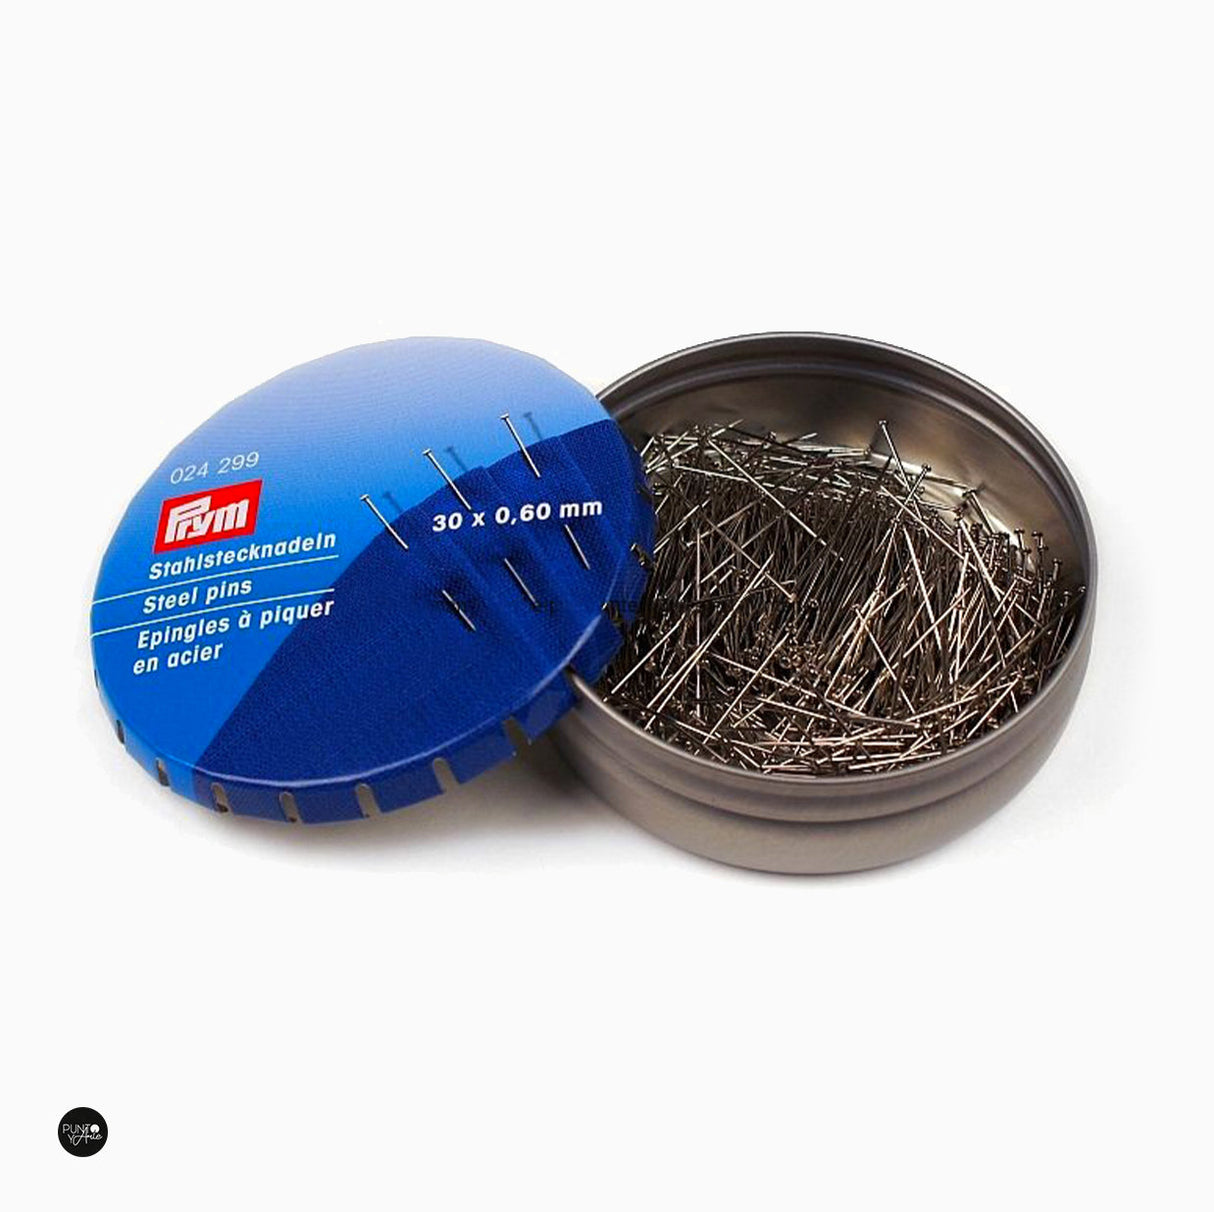 Steel Pins 0.60 x 30 mm 35 g - Prym 024299